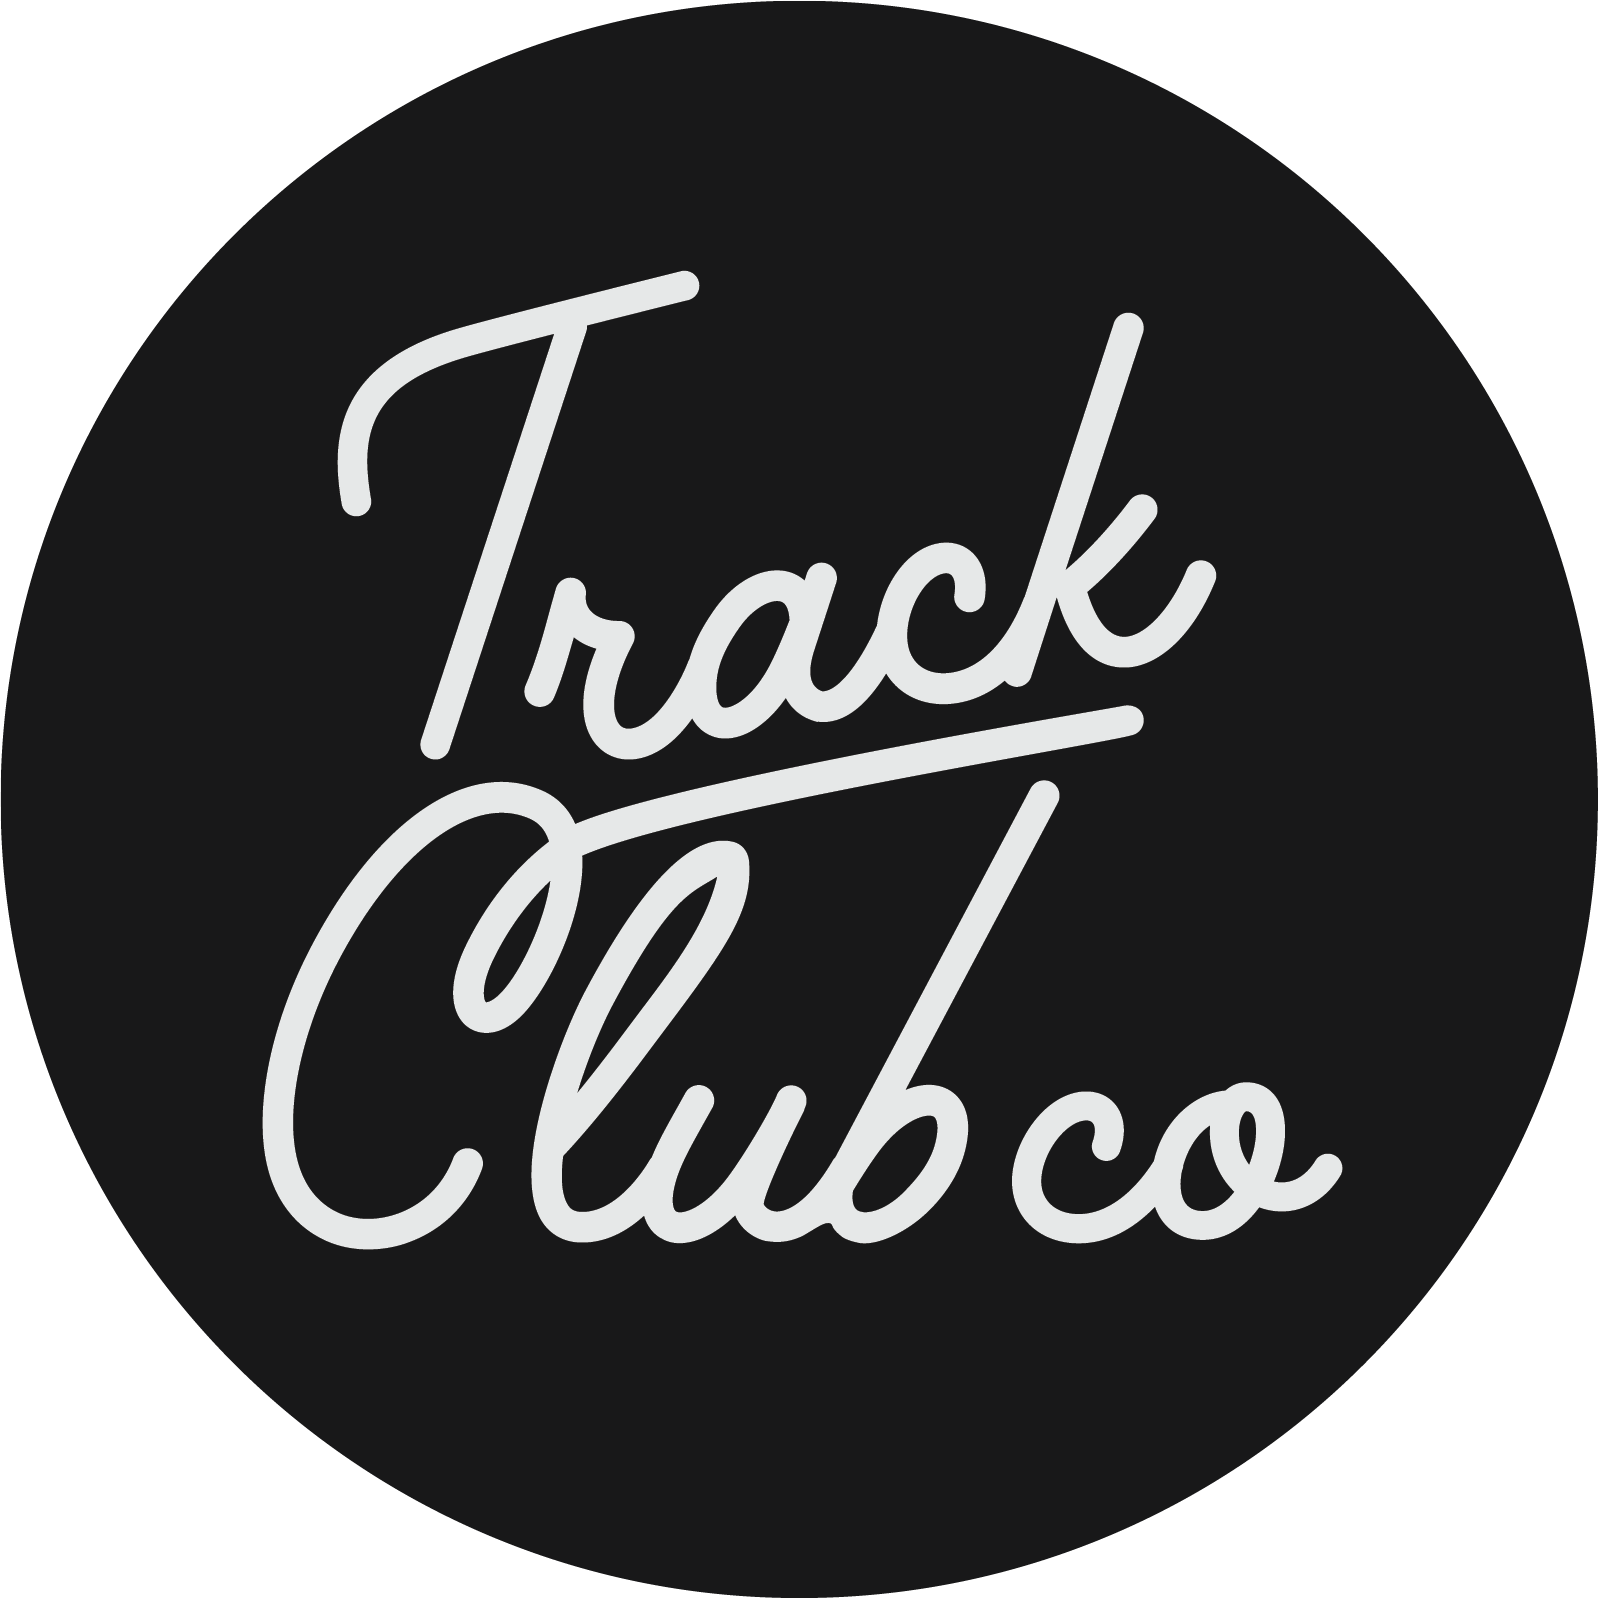 Track Club Co